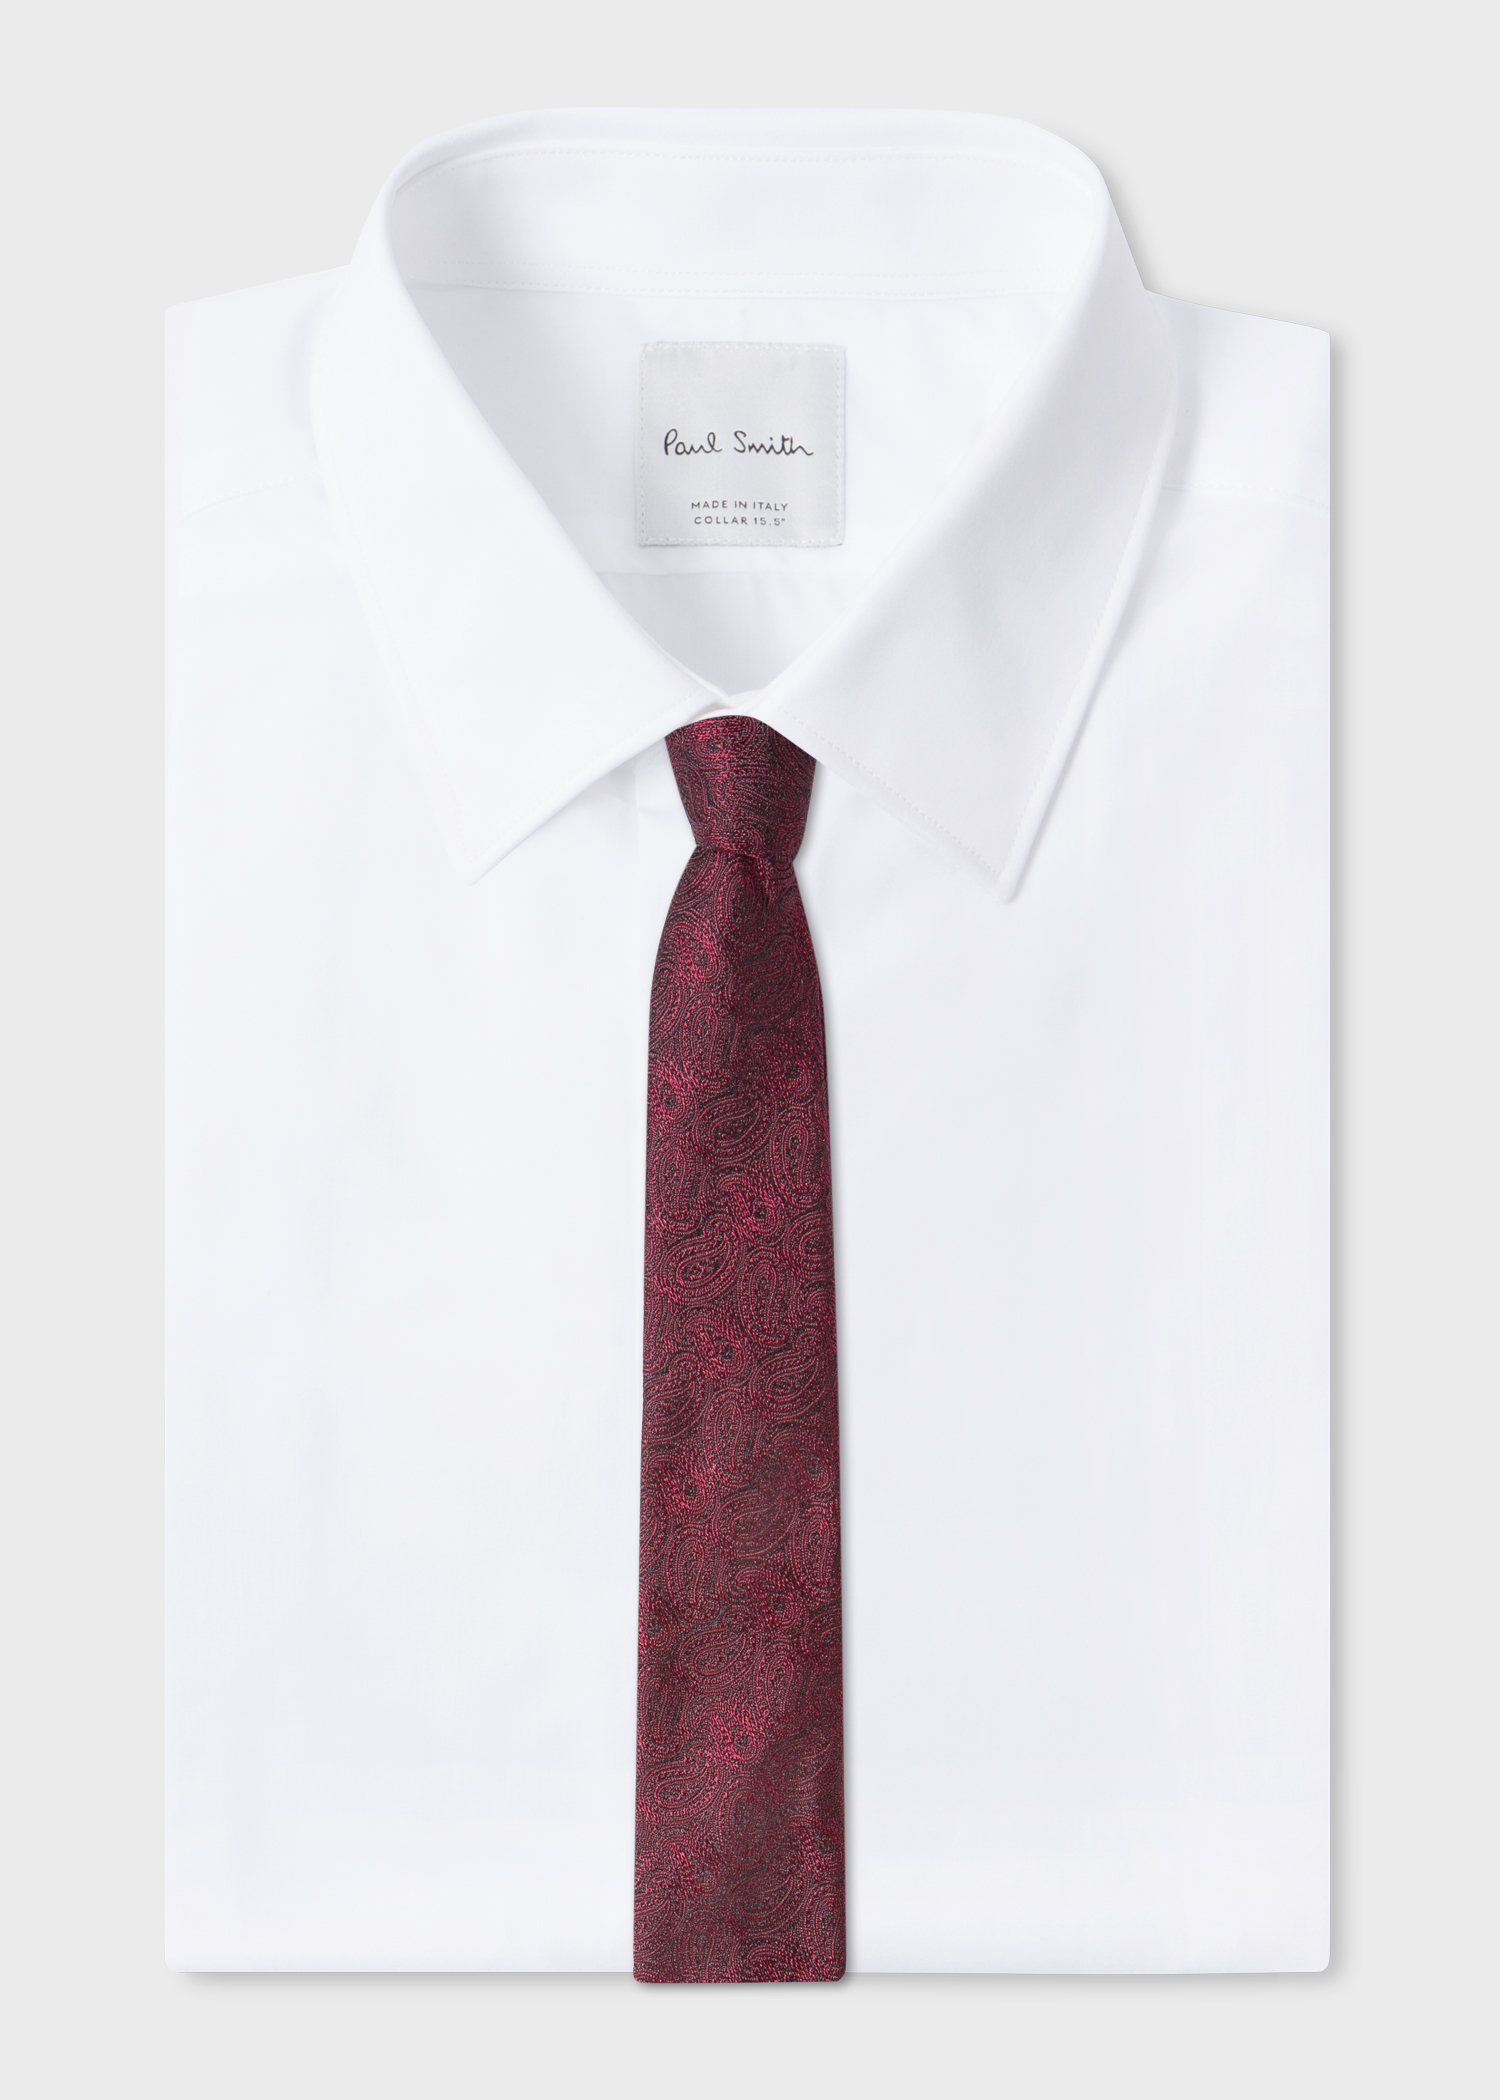 On Shirt View - Men's Burgundy 'Paisley' Motif Narrow Silk Tie Paul Smith